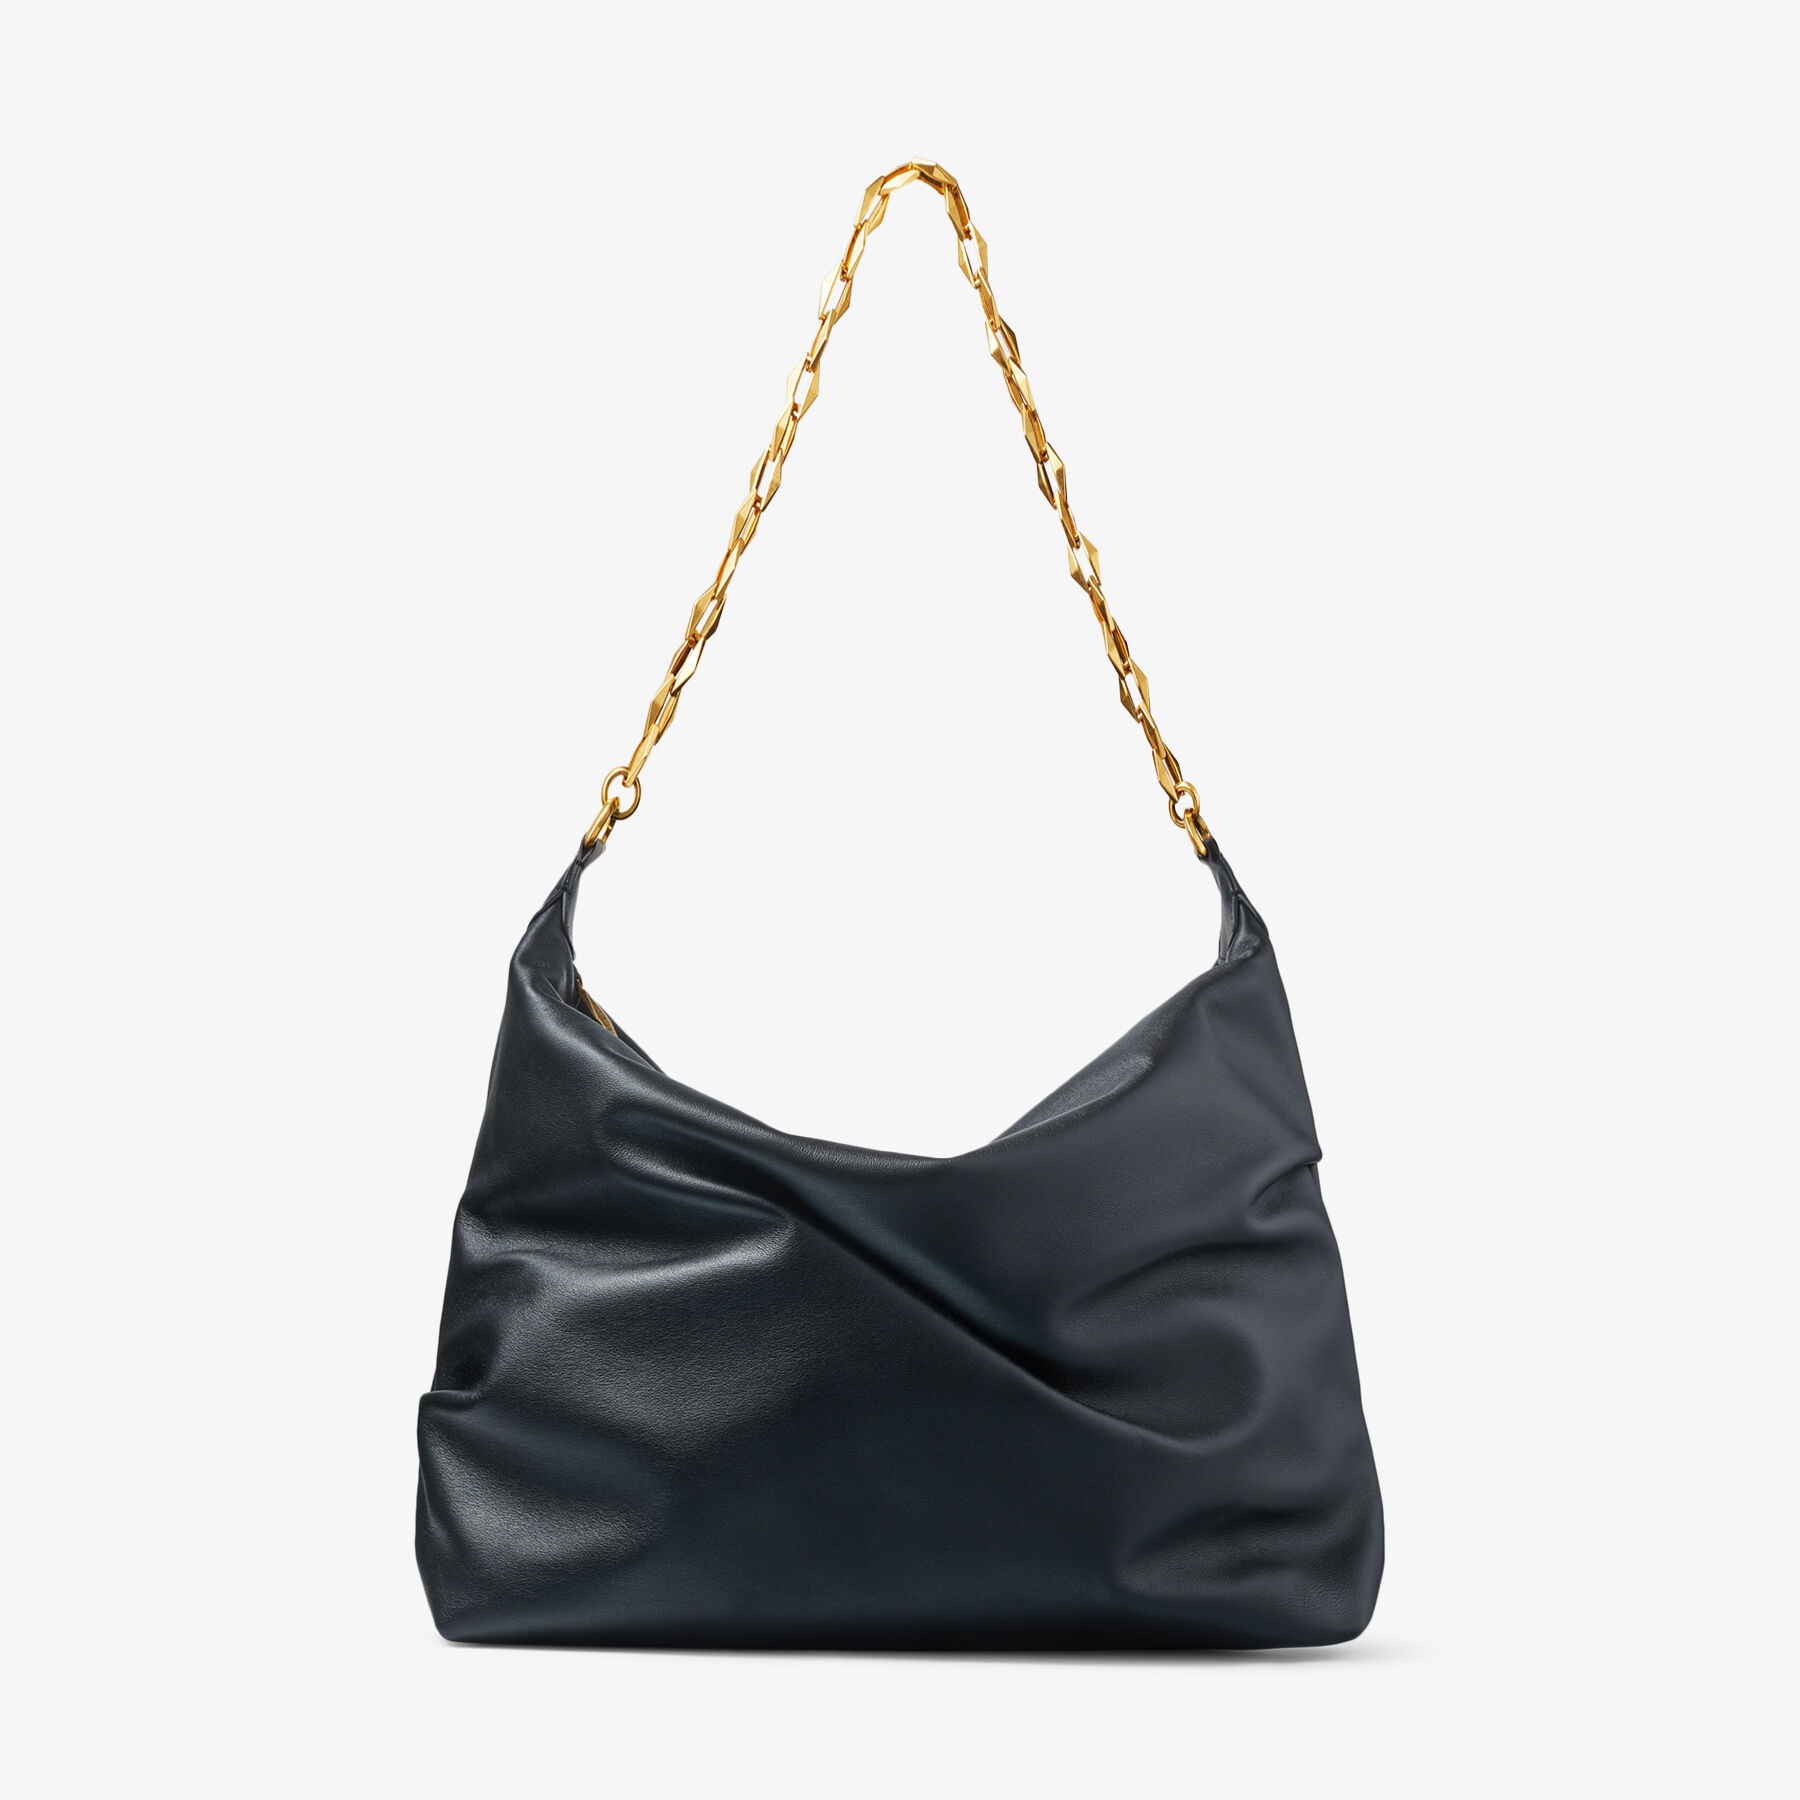 Diamond Soft Hobo M
Black Soft Calf Leather Hobo Bag with Chain Strap - 1